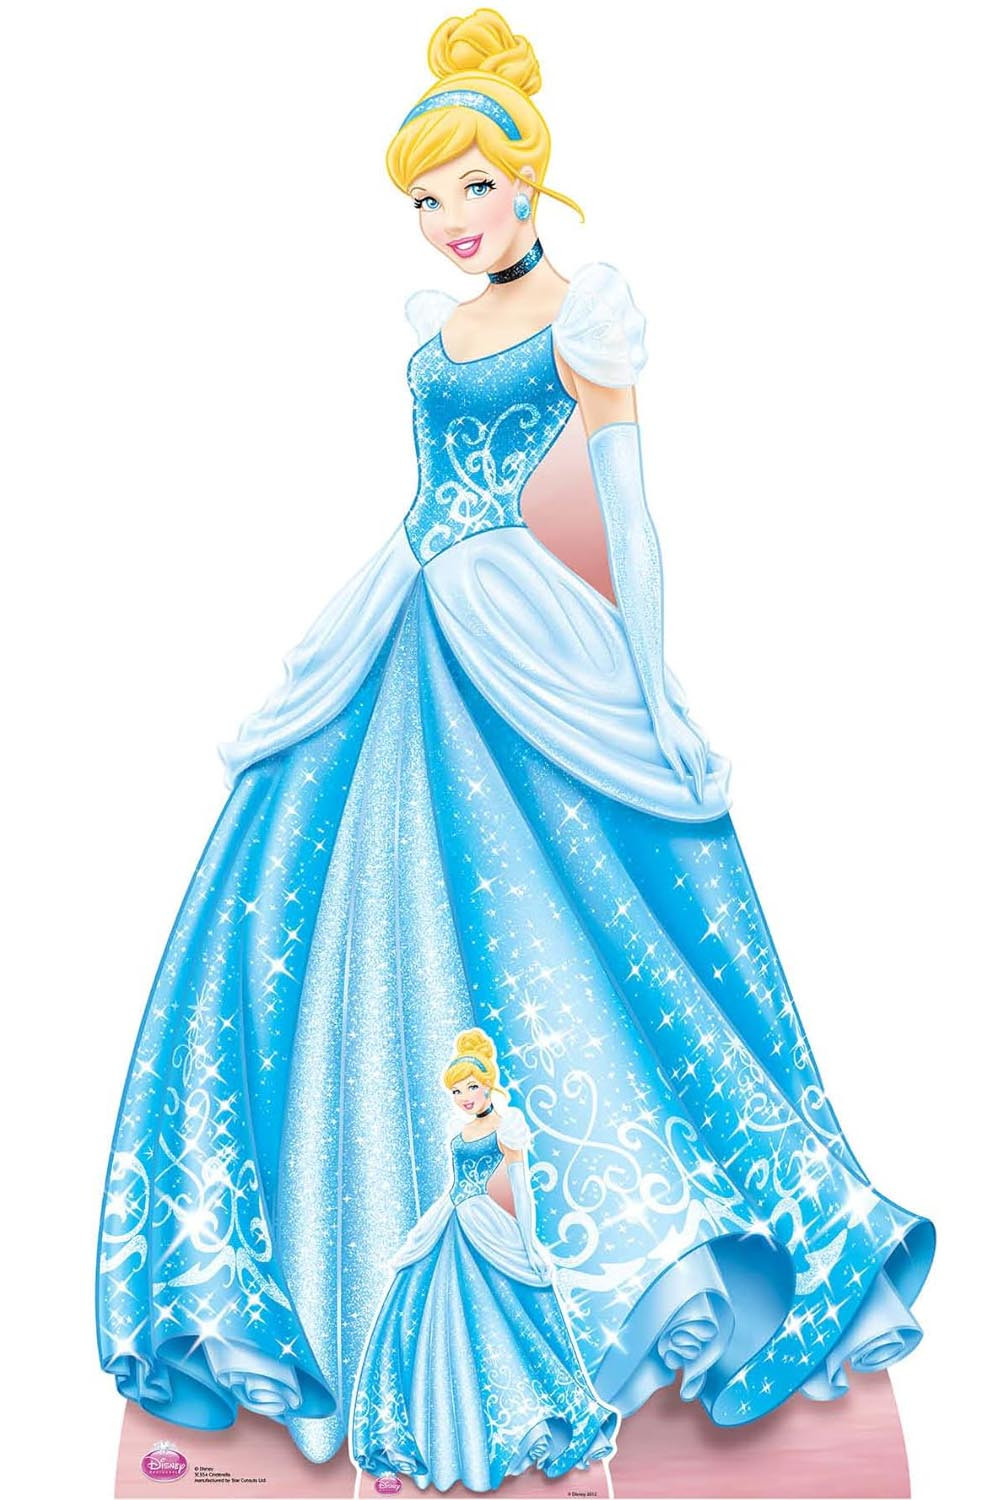 Cinderella Disney Princess Cardboard Cutout / Standee buy cutouts at